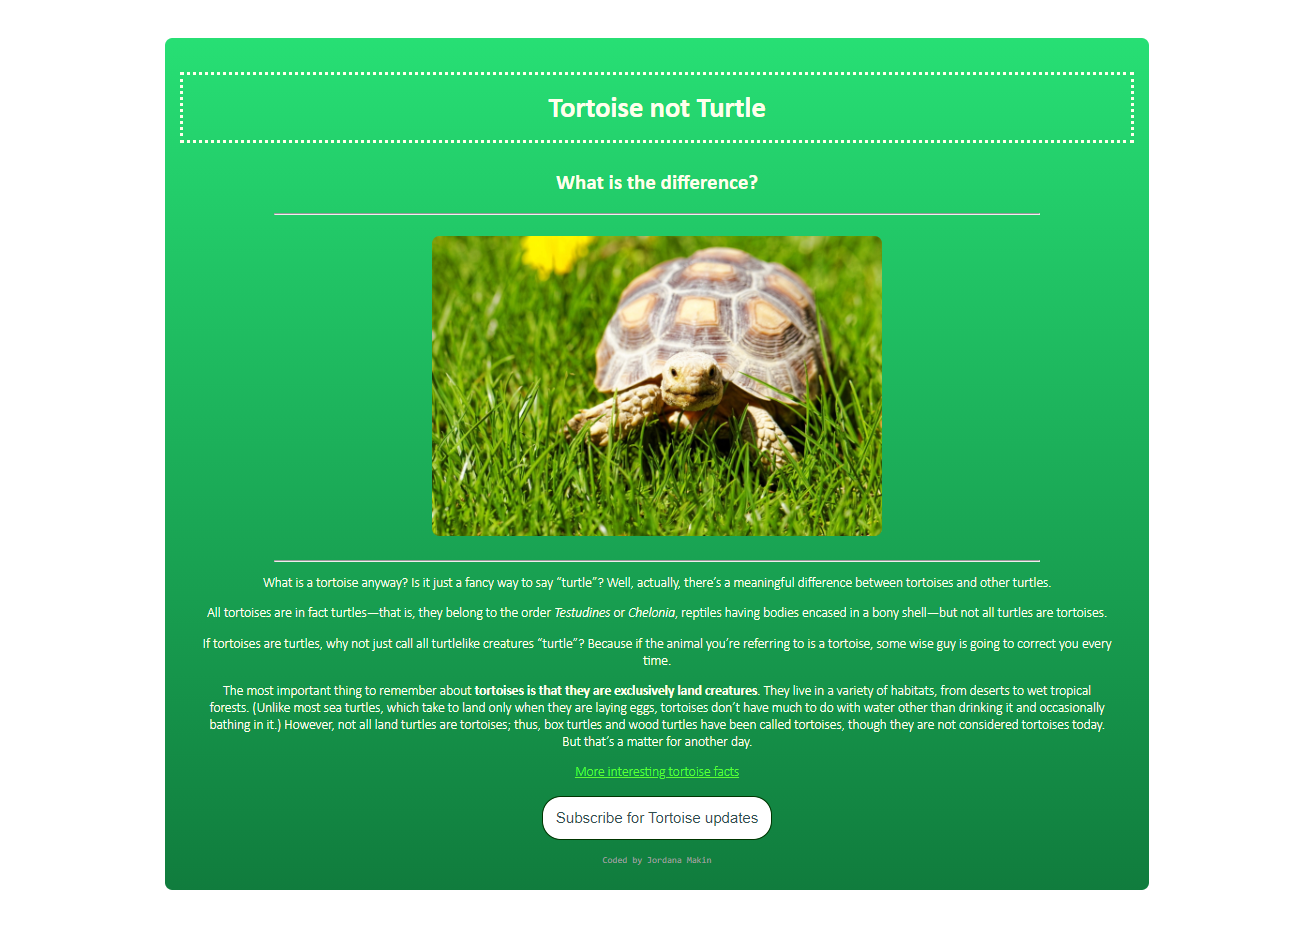 Tortoise Landing Page